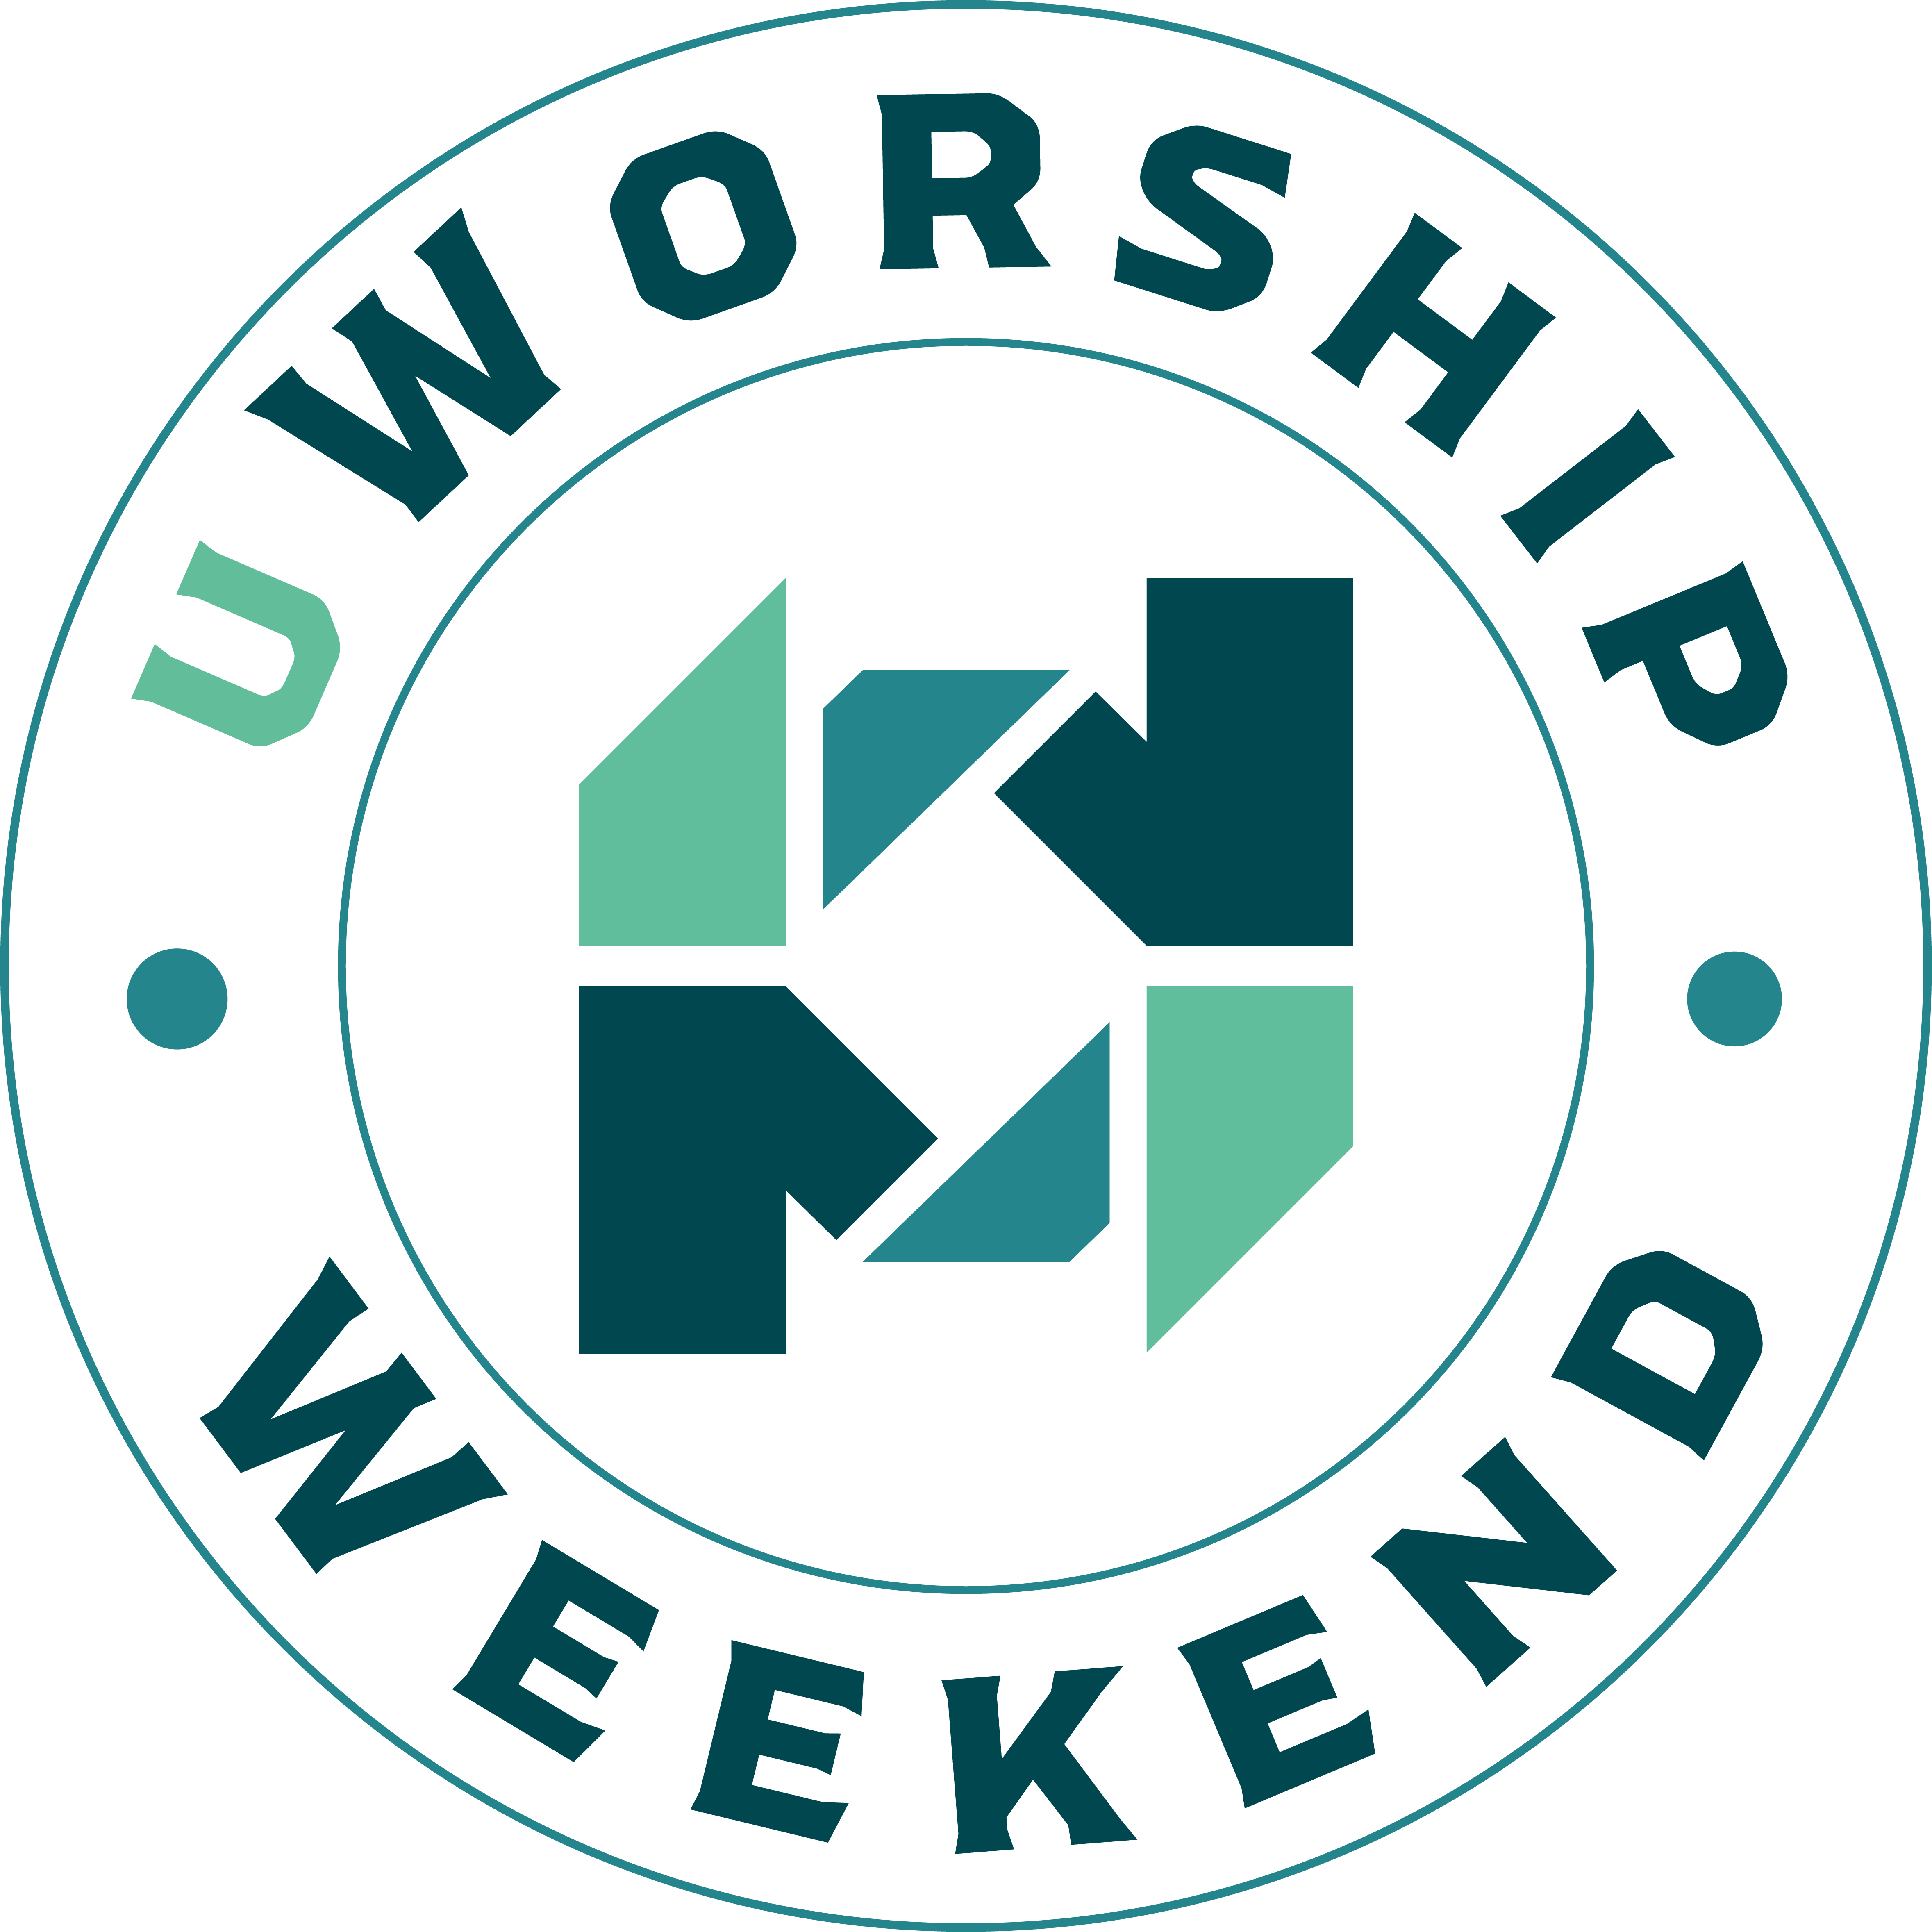 uWorship Weekend: a Baptist AllState event